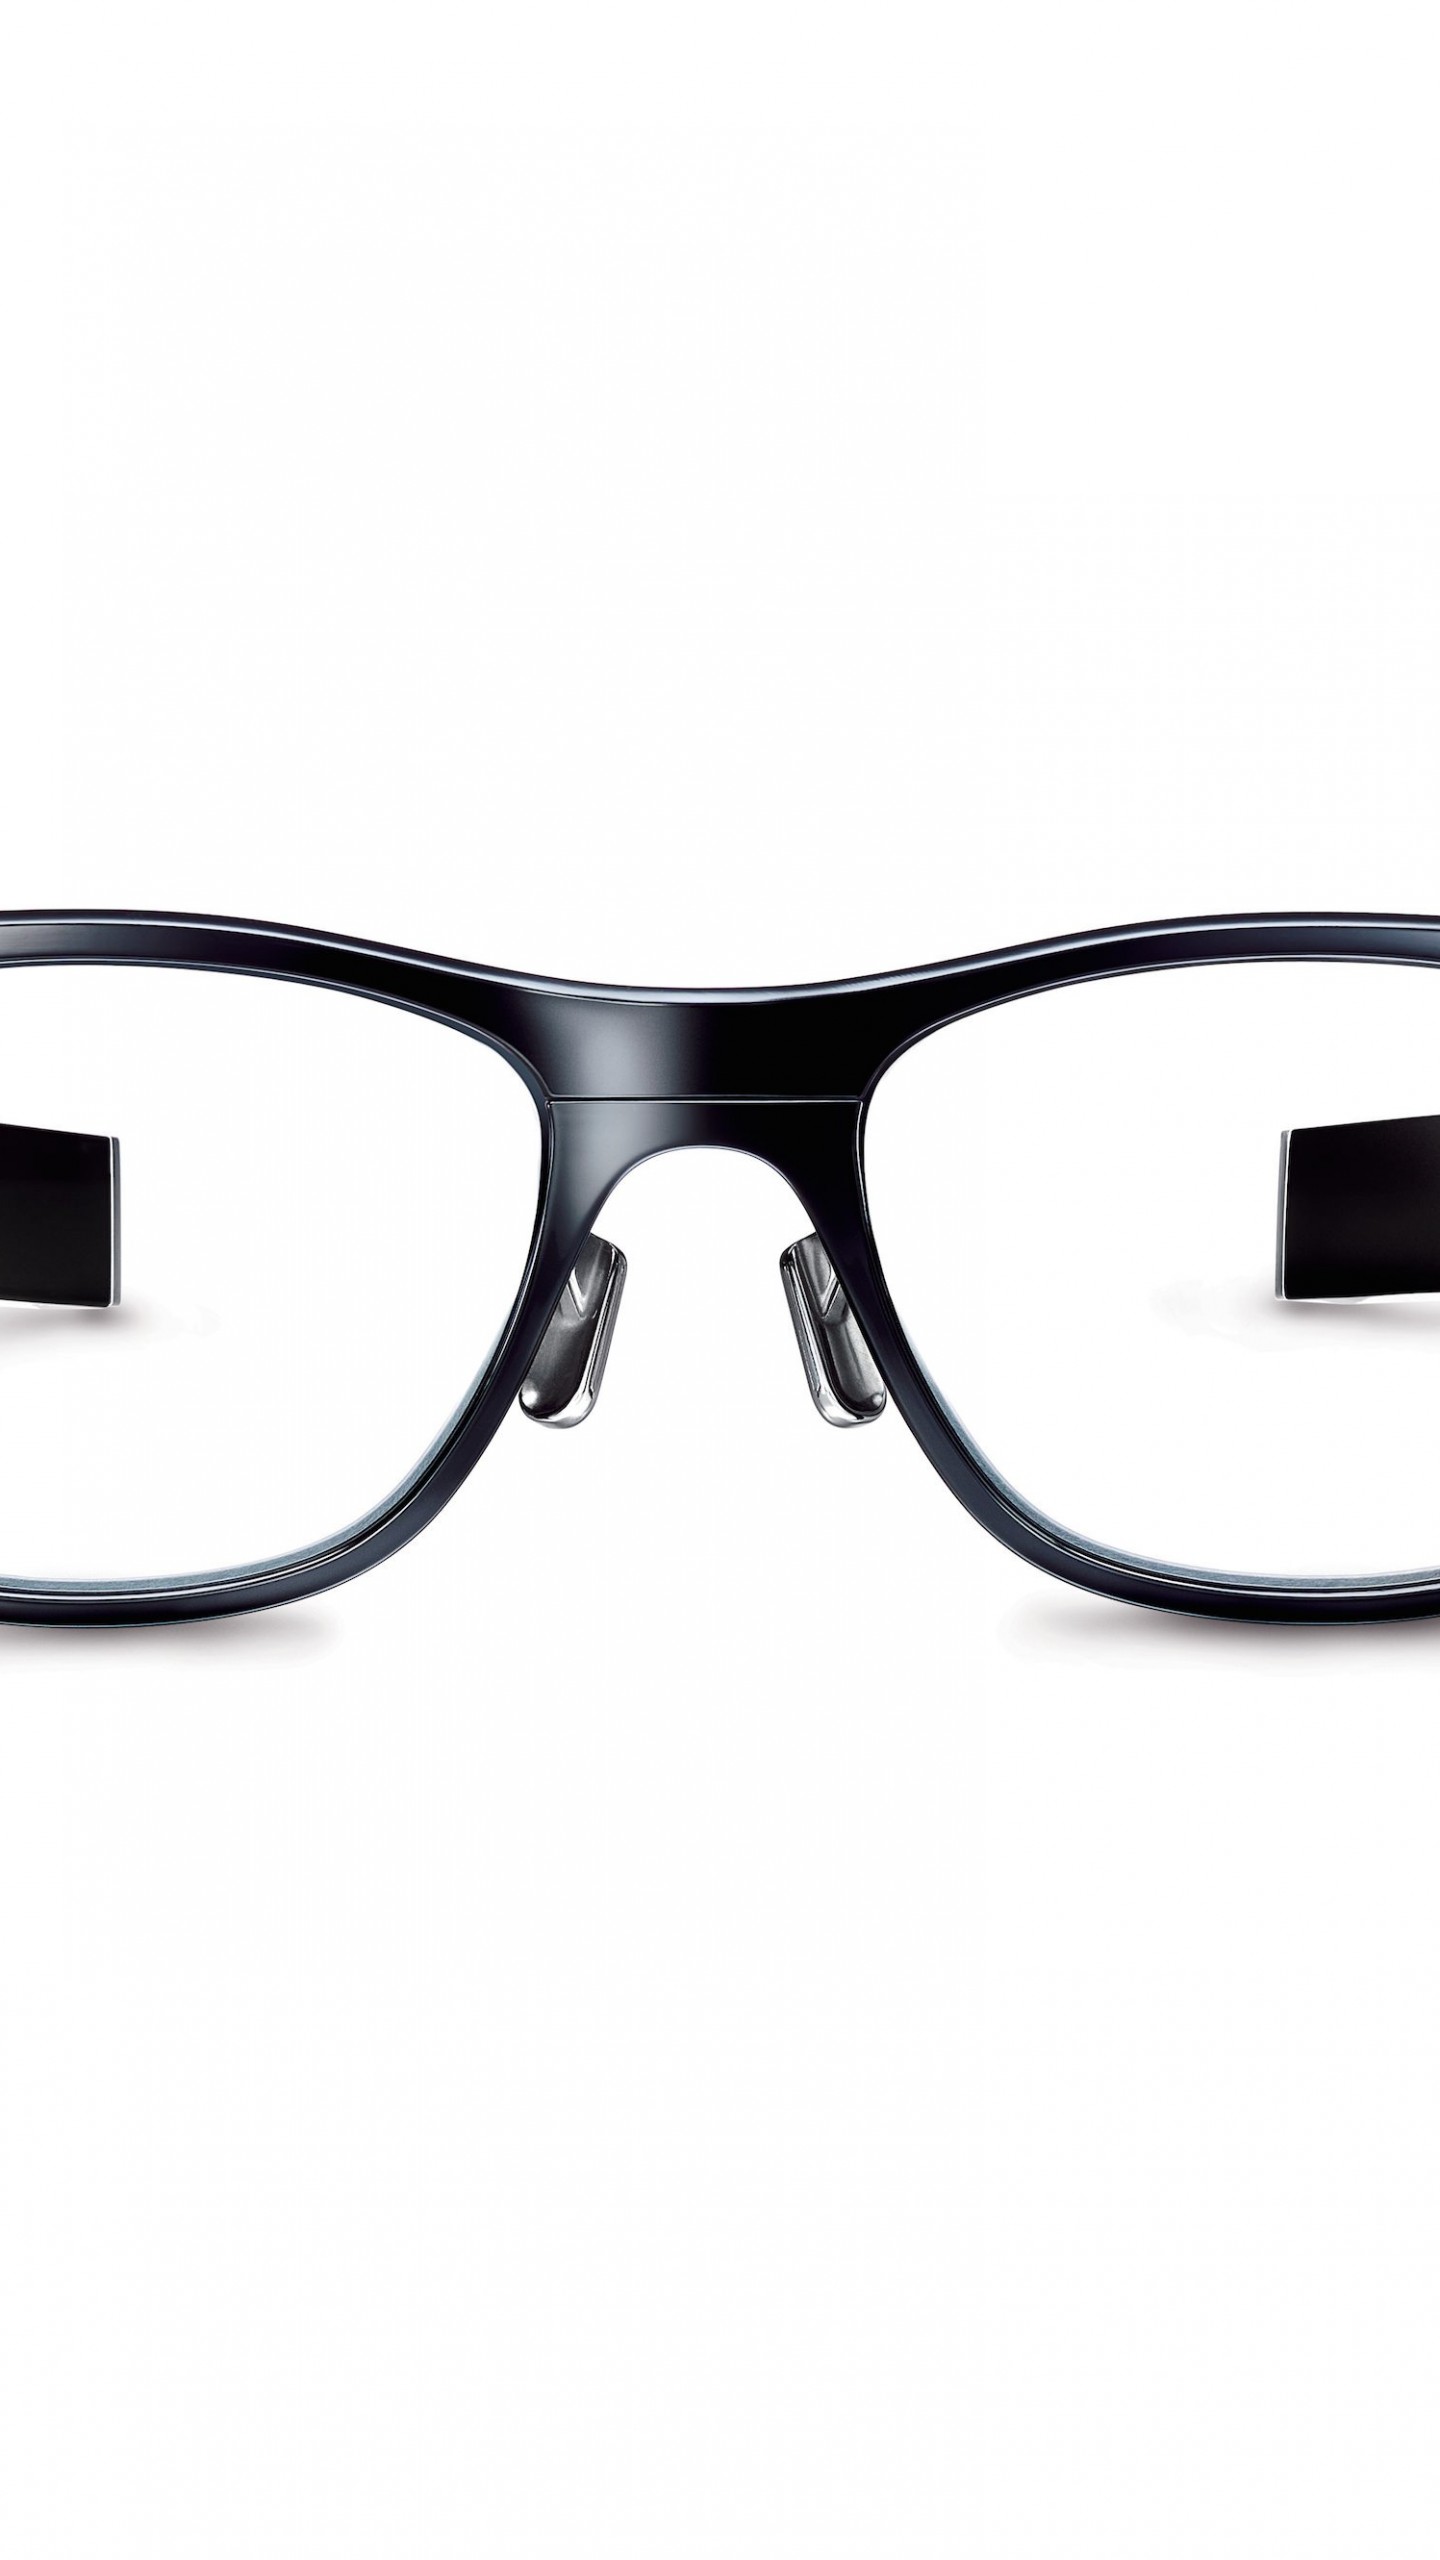 Jins Meme Smart Glasses Wallpaper for SAMSUNG Galaxy S6